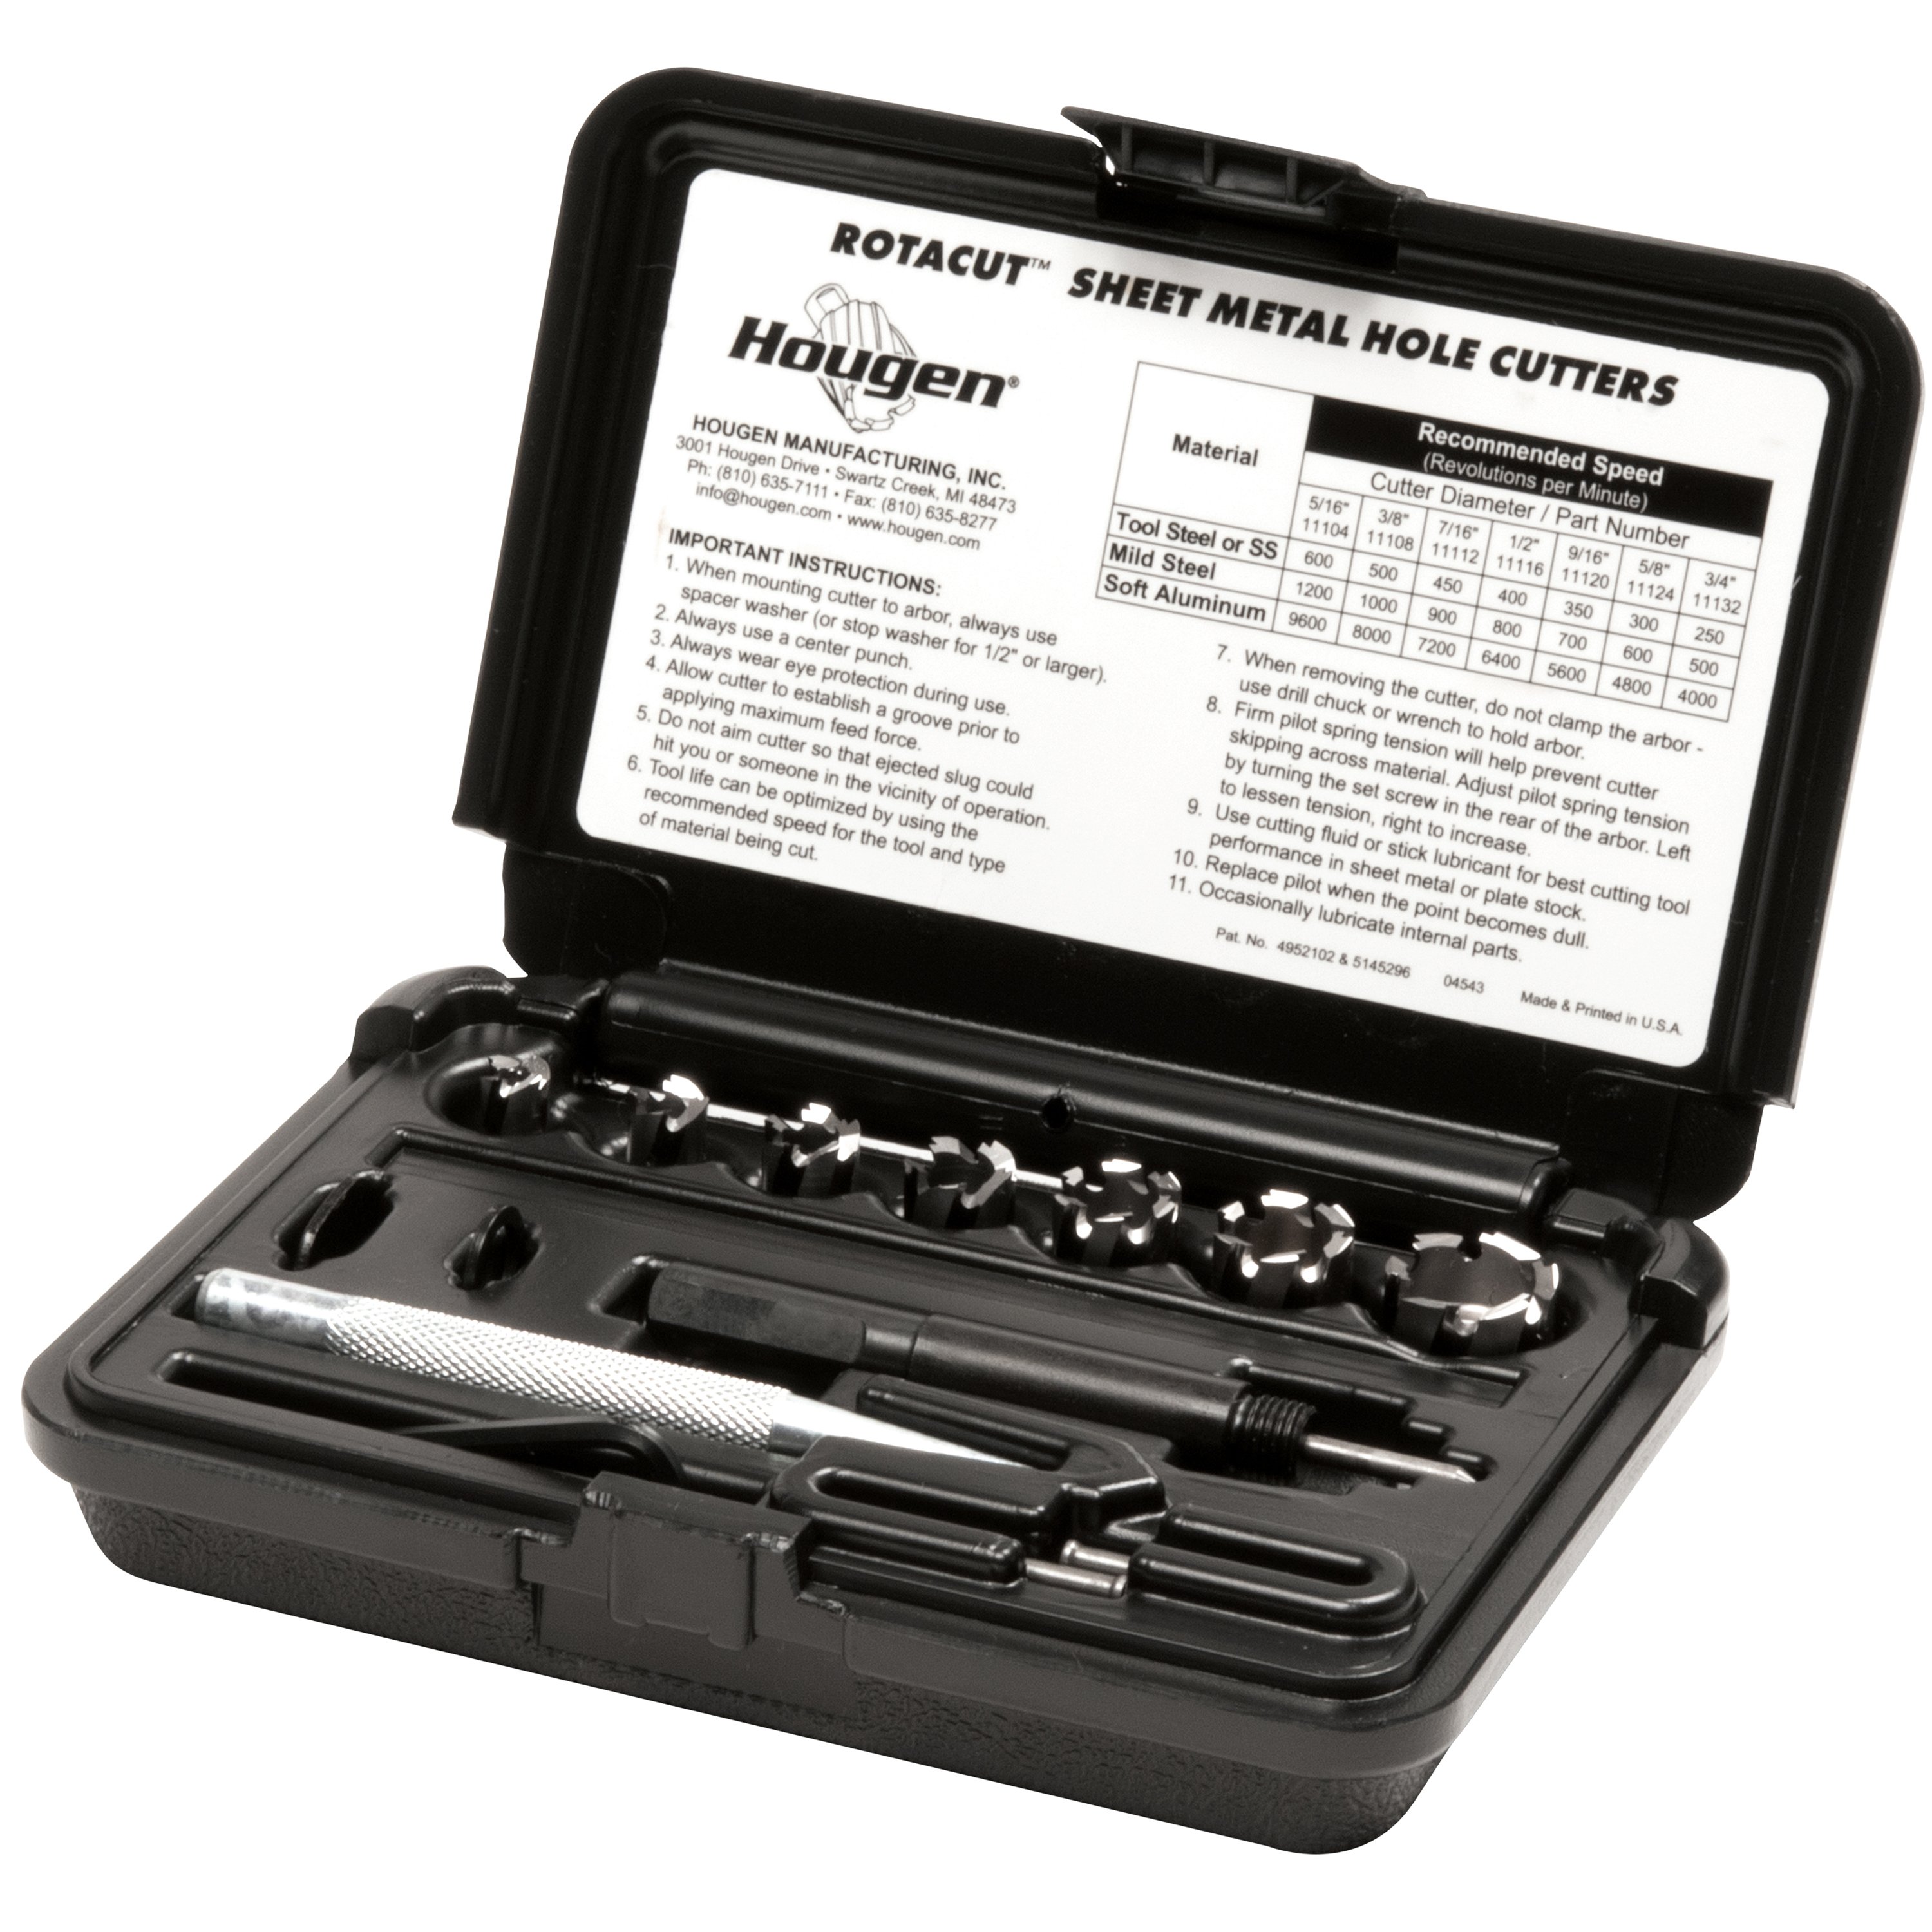 Hougen 11075 RotaCut Sheet Metal Hole Cutter Kit 662850010594 eBay